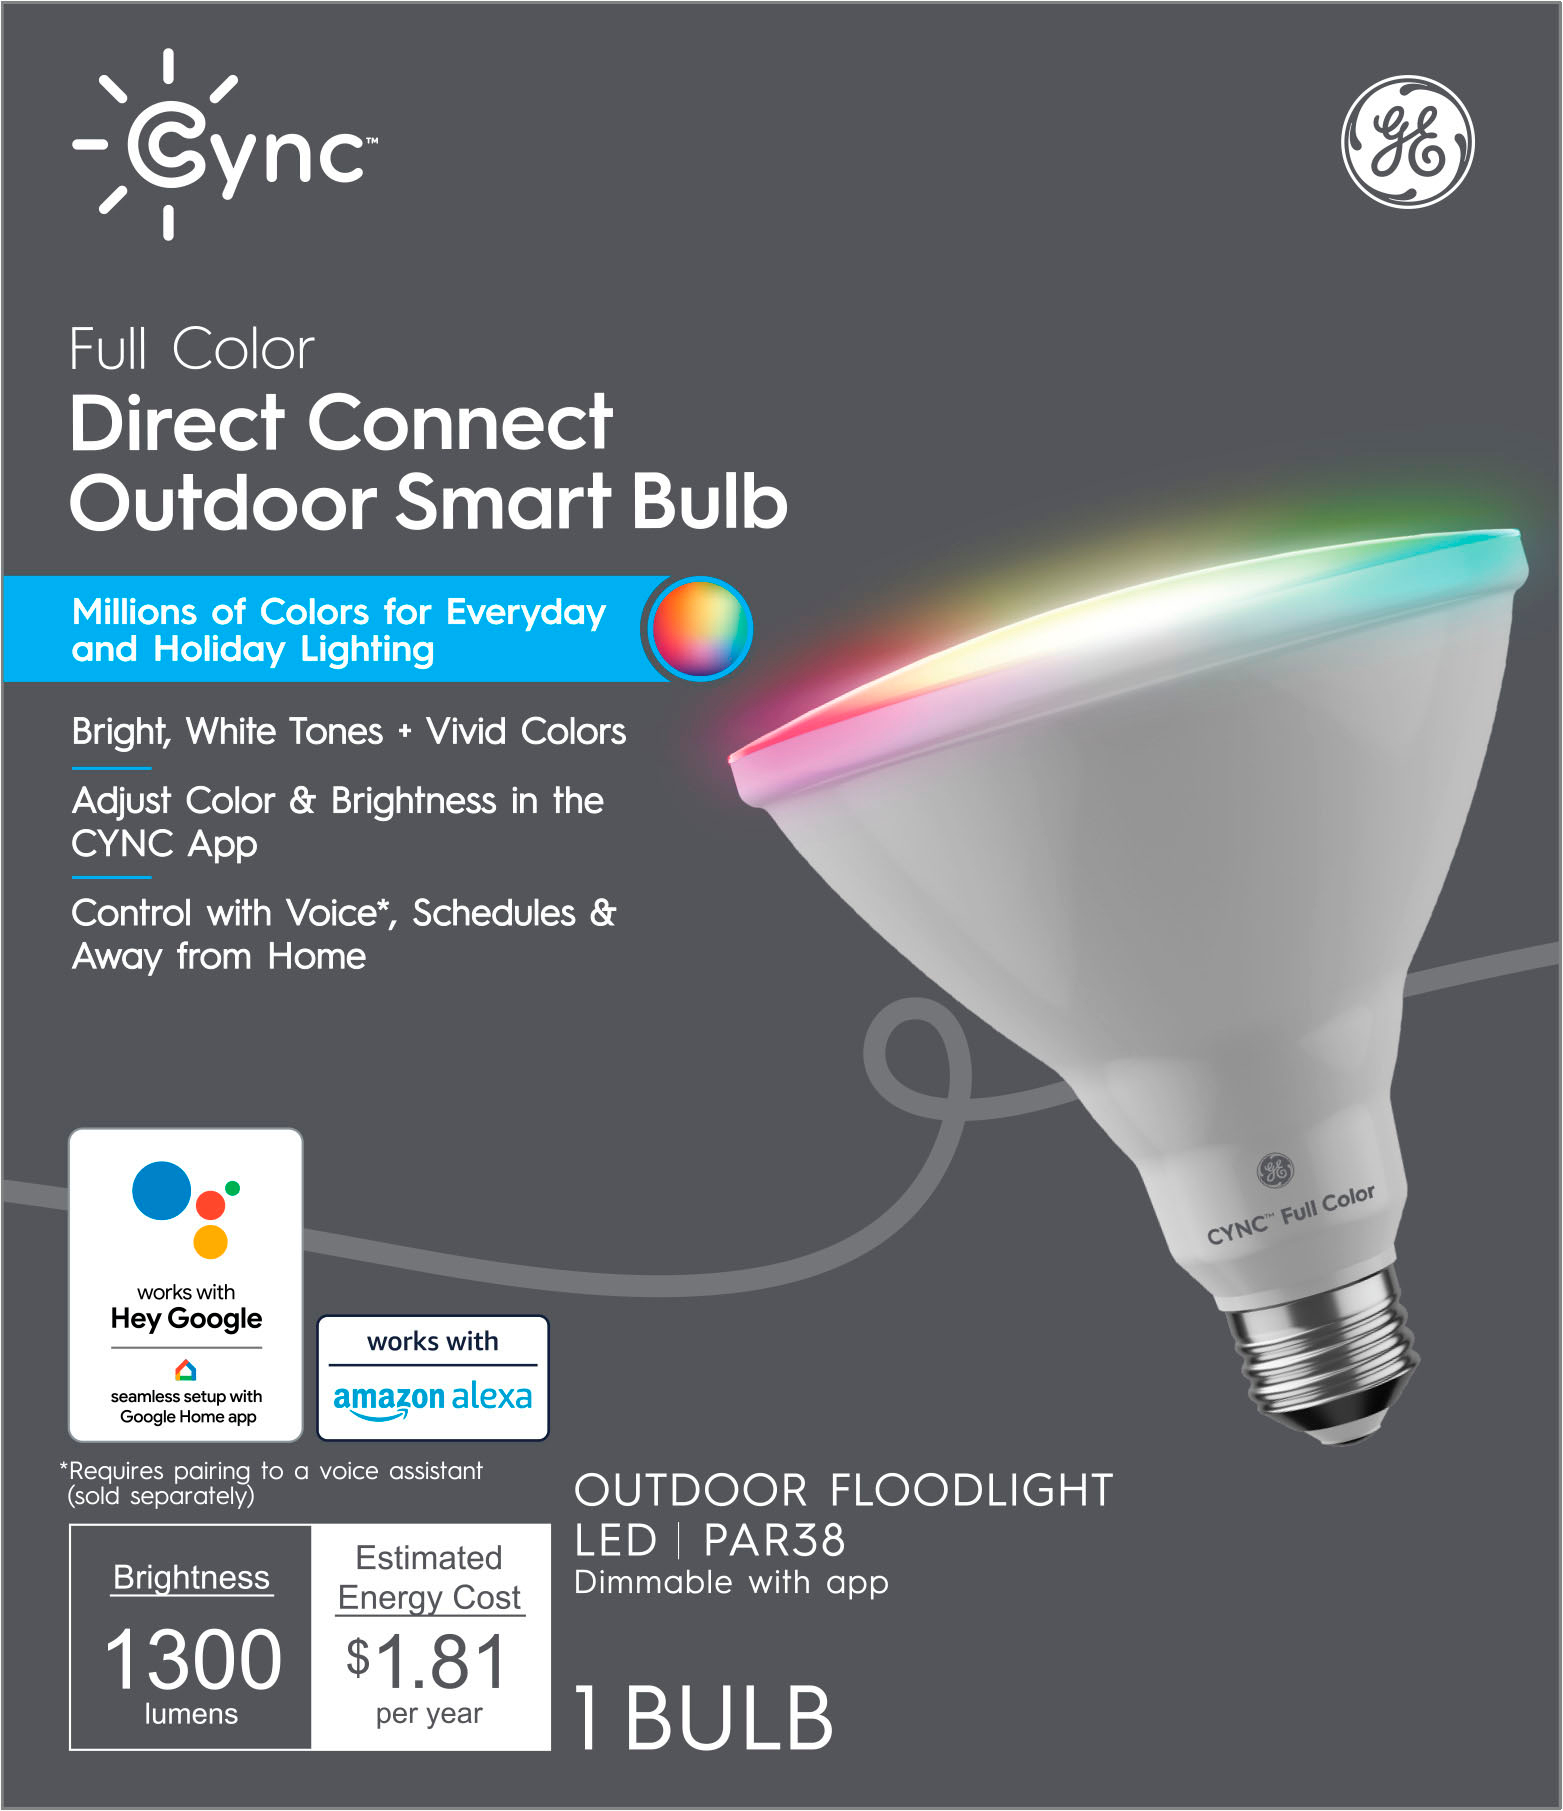 GE Cync Full Color Direct Connect Outdoor Floodlight PAR38 Bulb